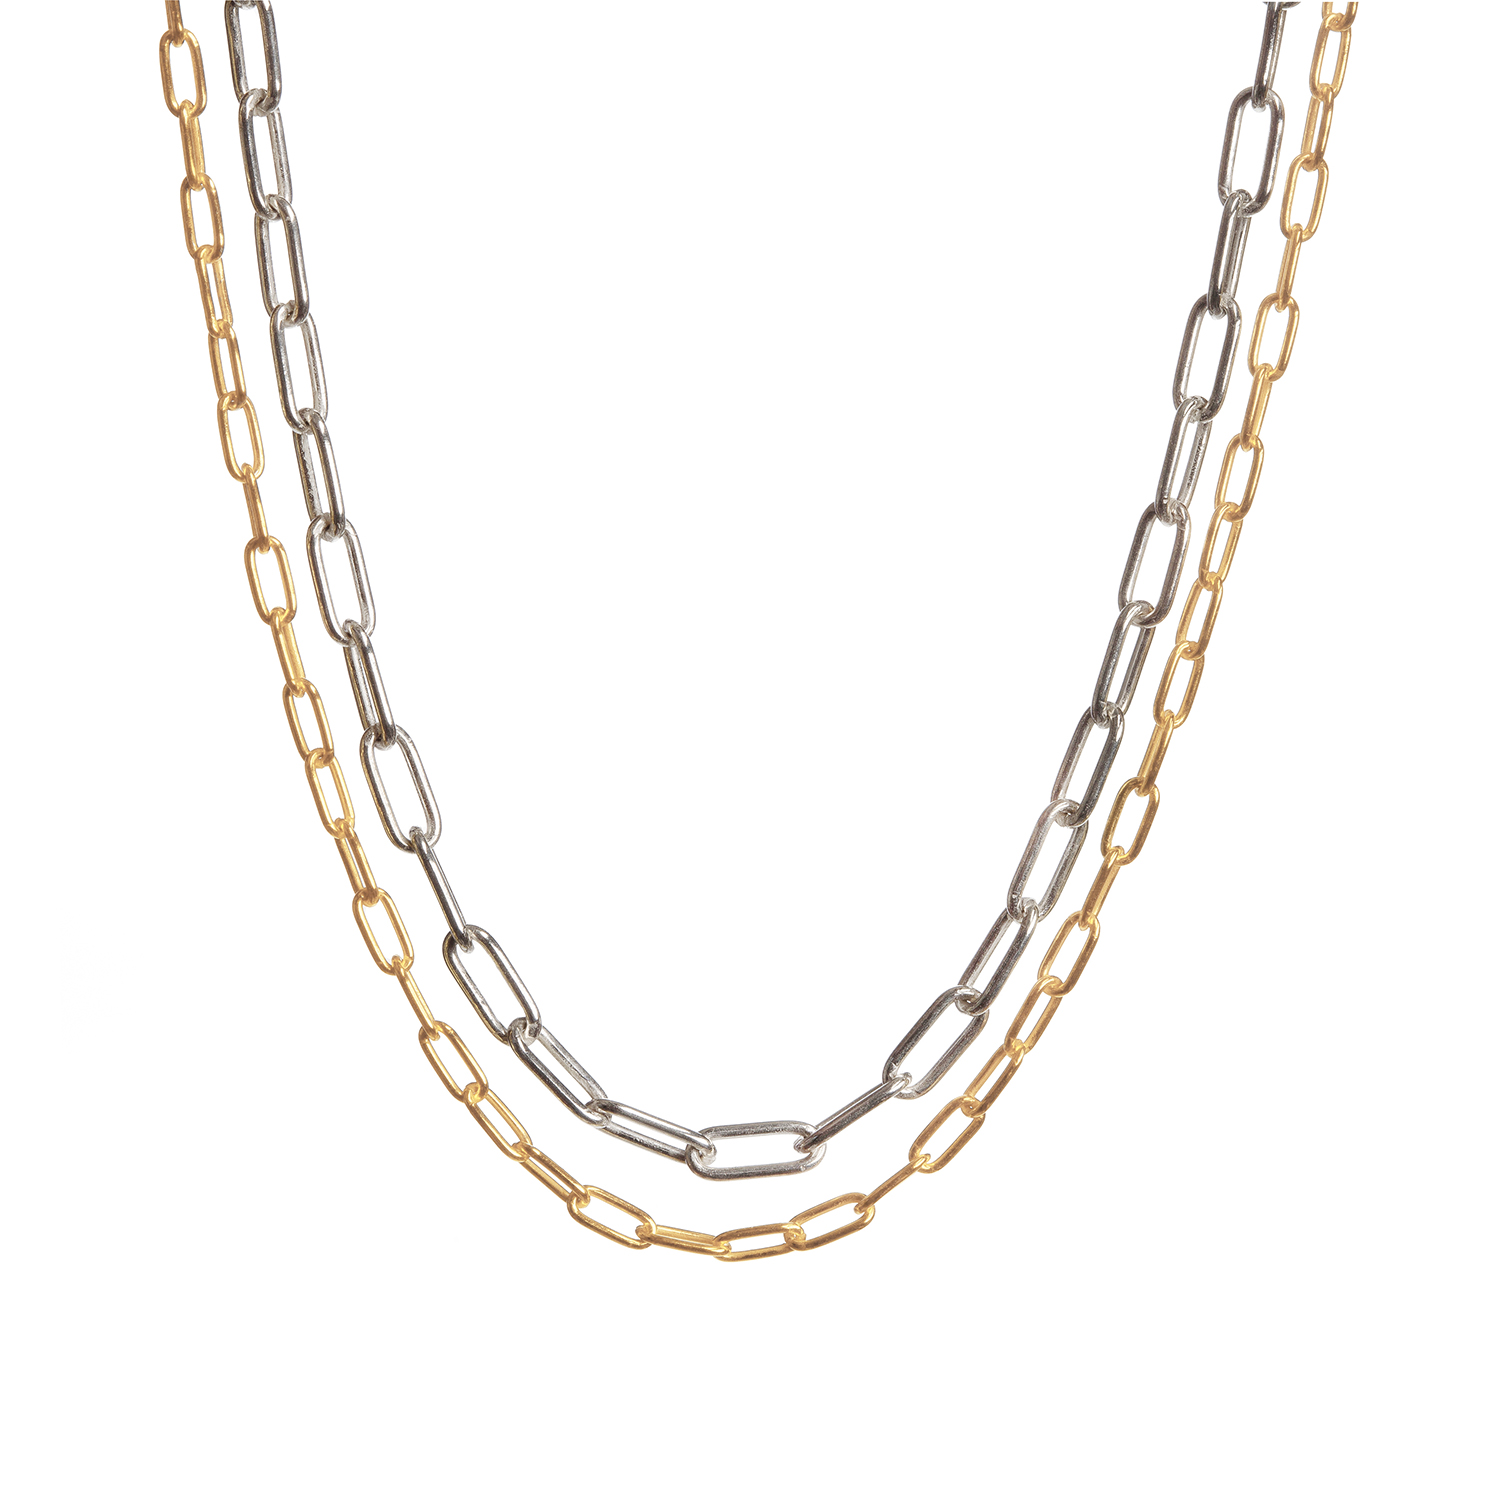 metaformi-sperky-double-link-chain-necklace